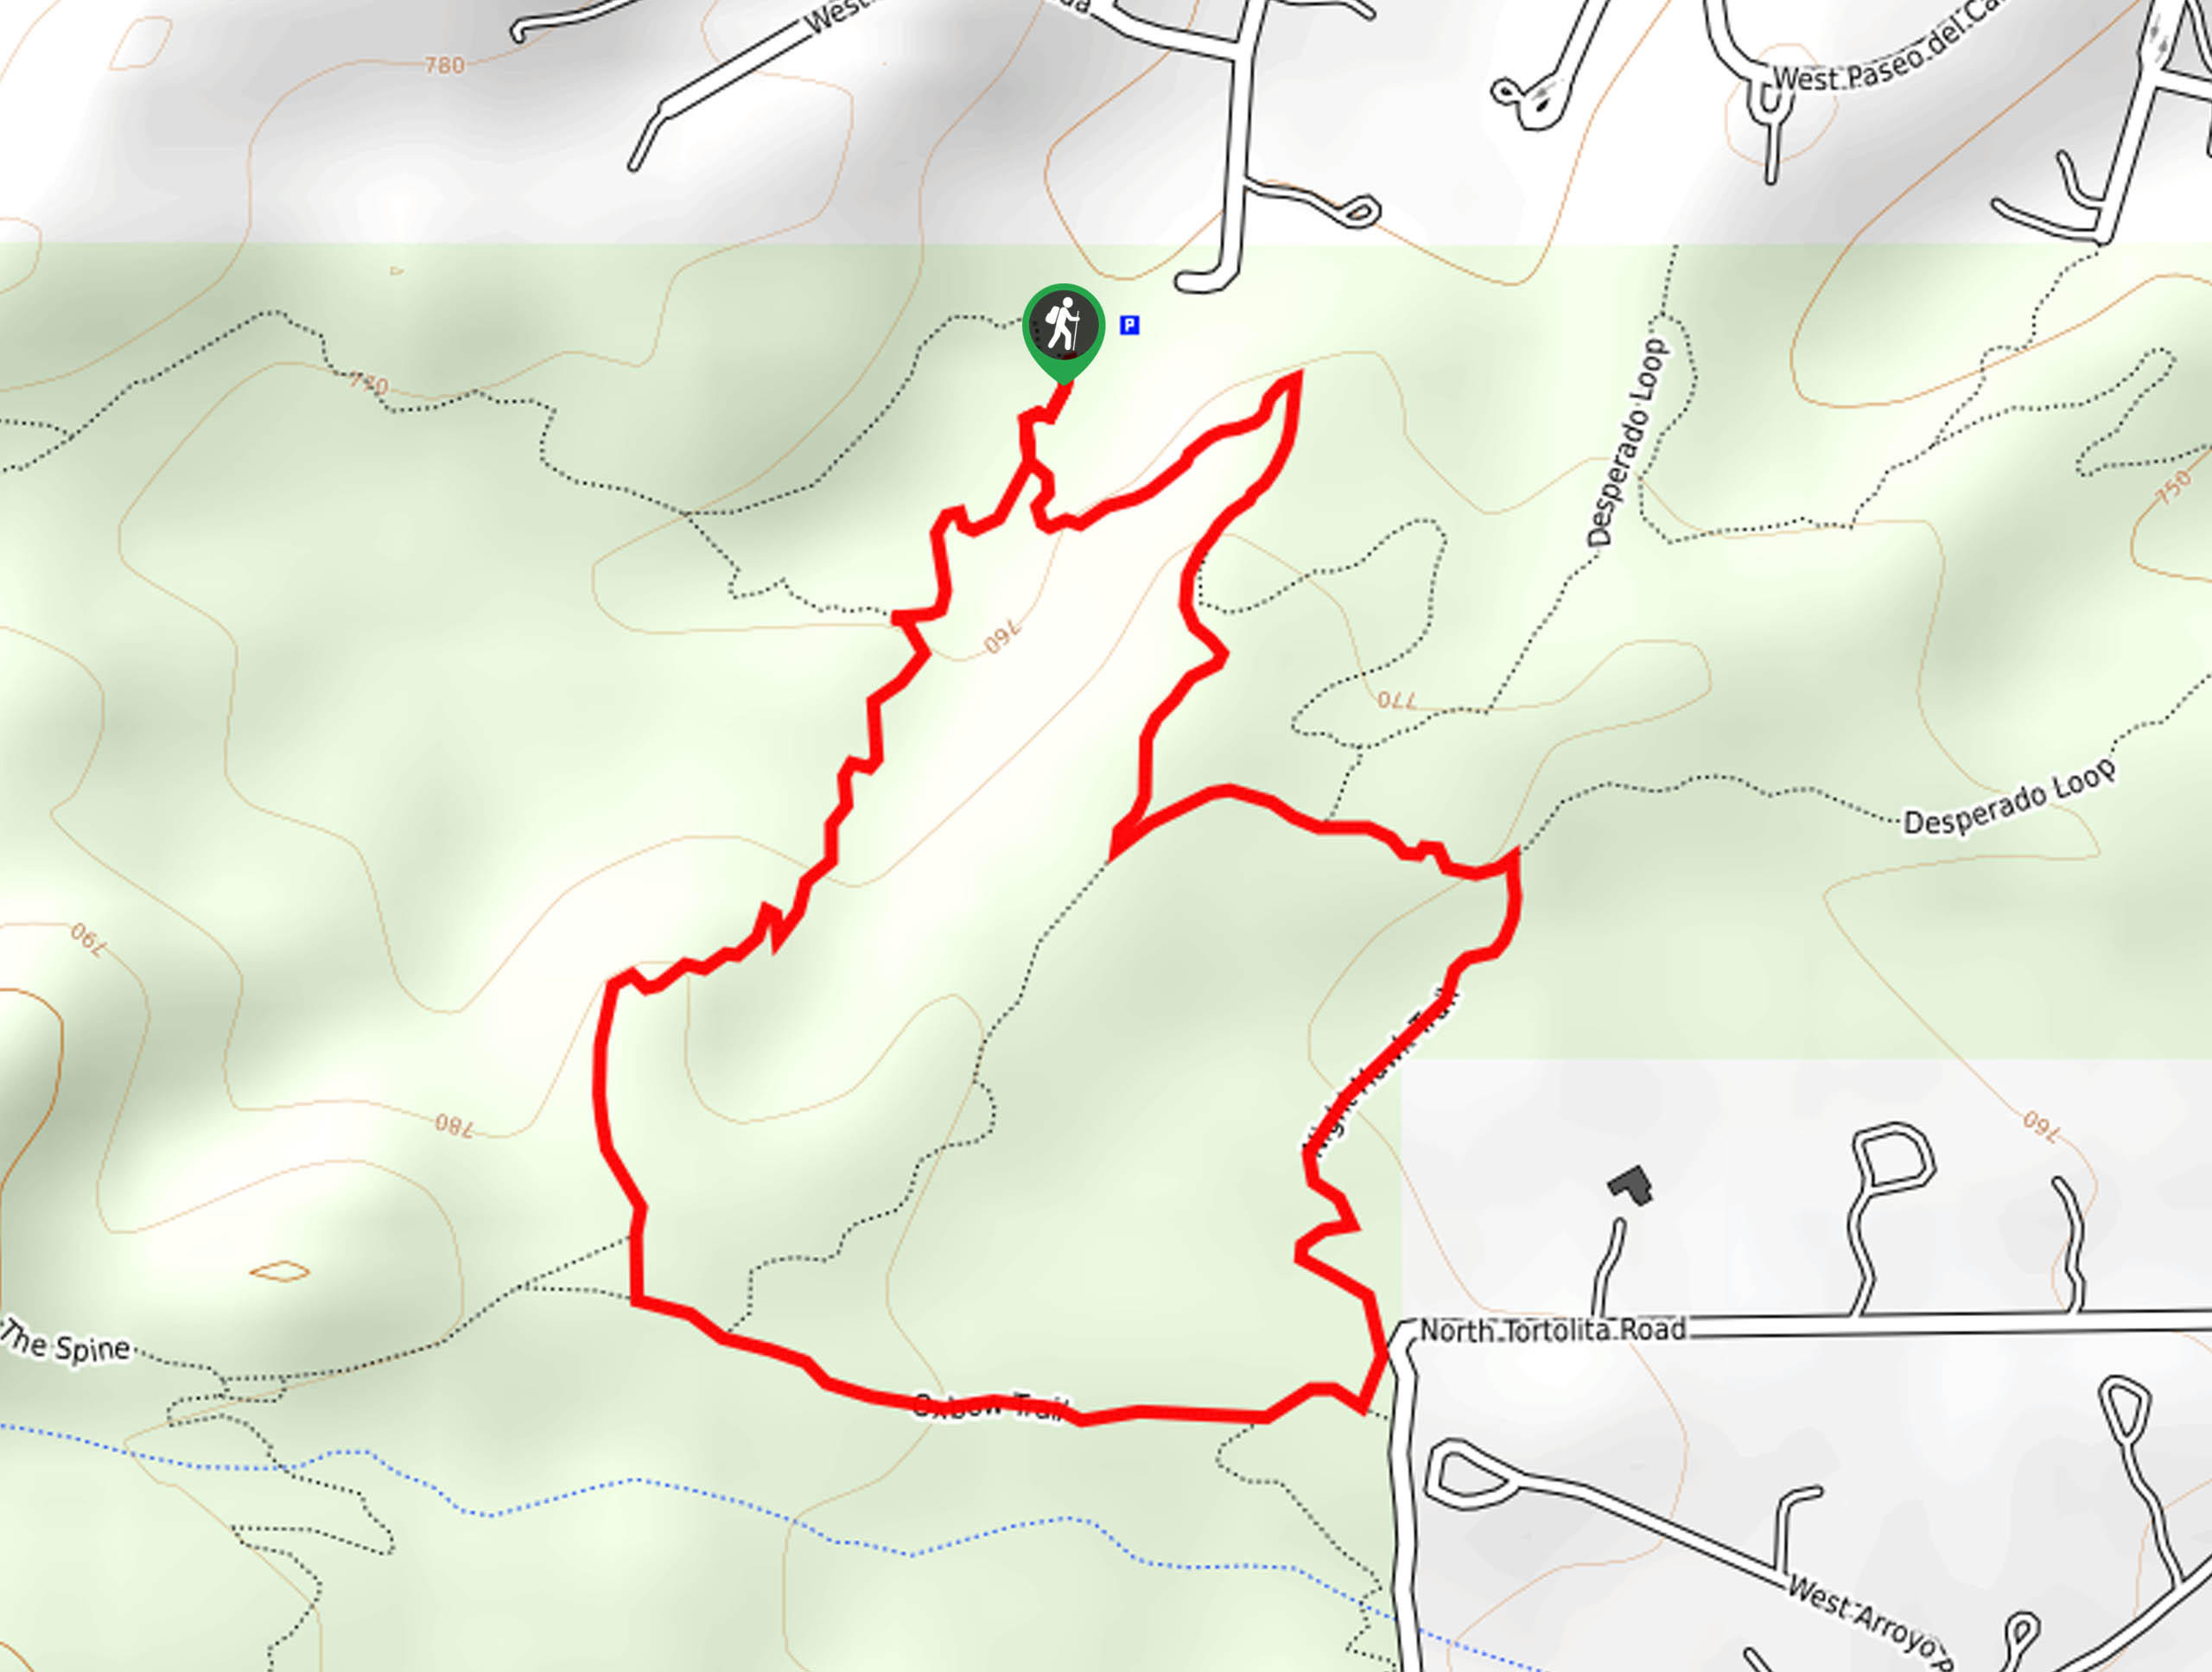 Wildflower Ridge, Oxbow, and Desperado Loop